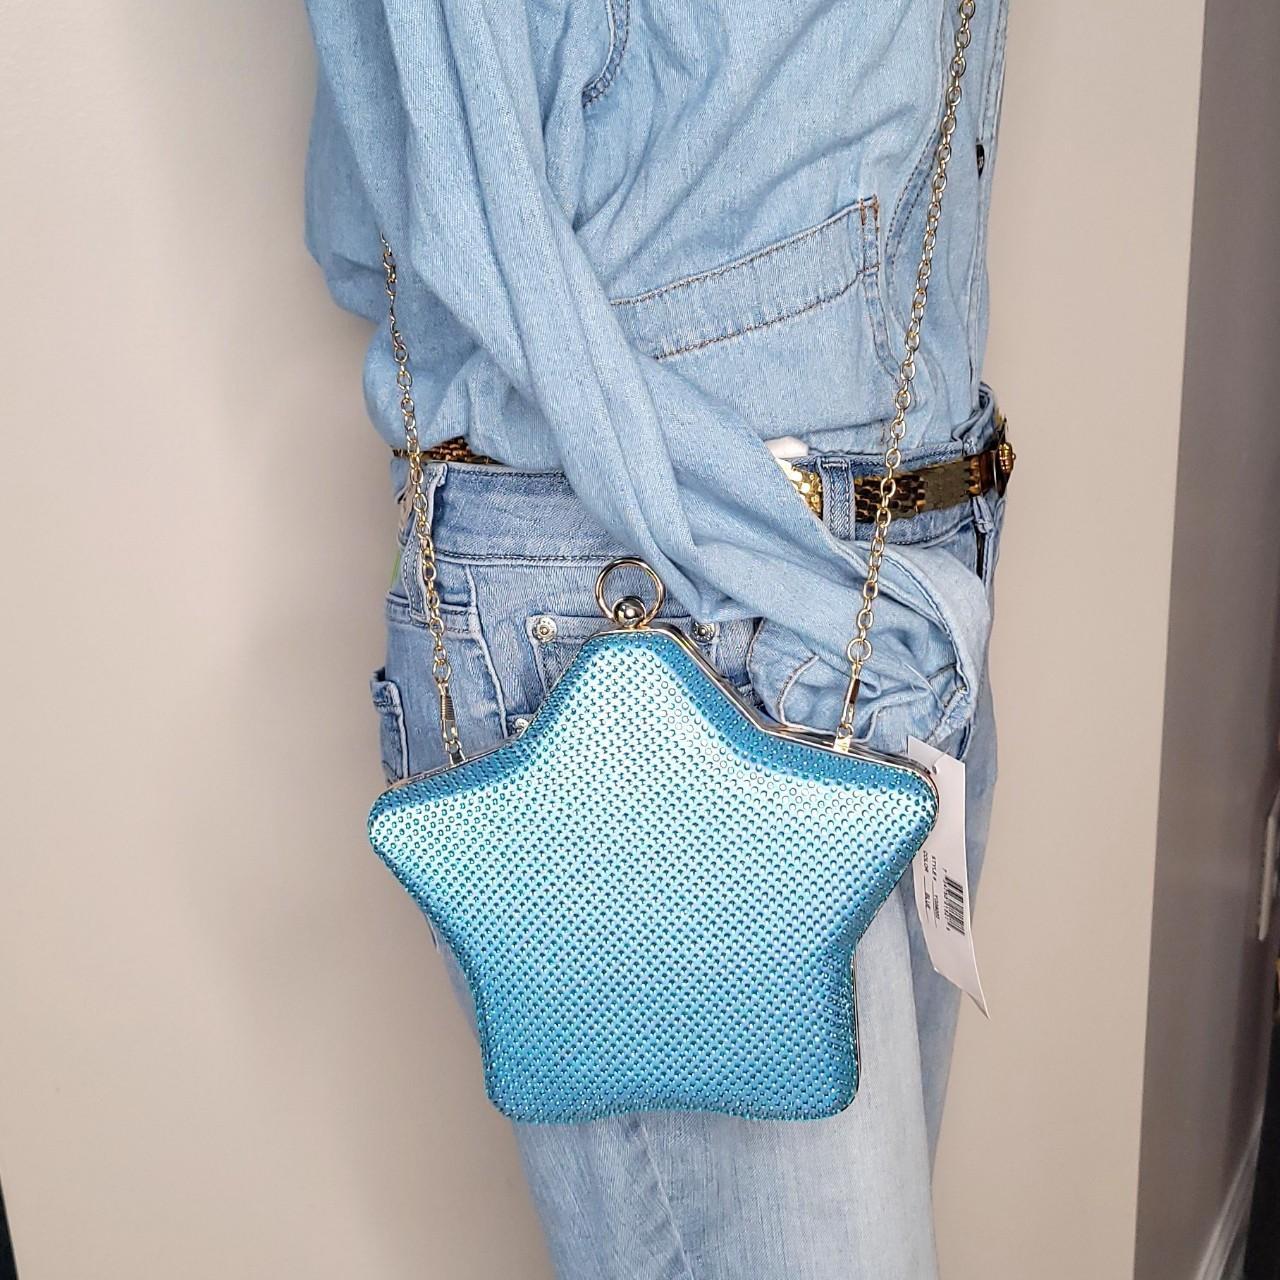 The Rhinestone J Marc Mini Shoulder Bag | Marc Jacobs | Official Site